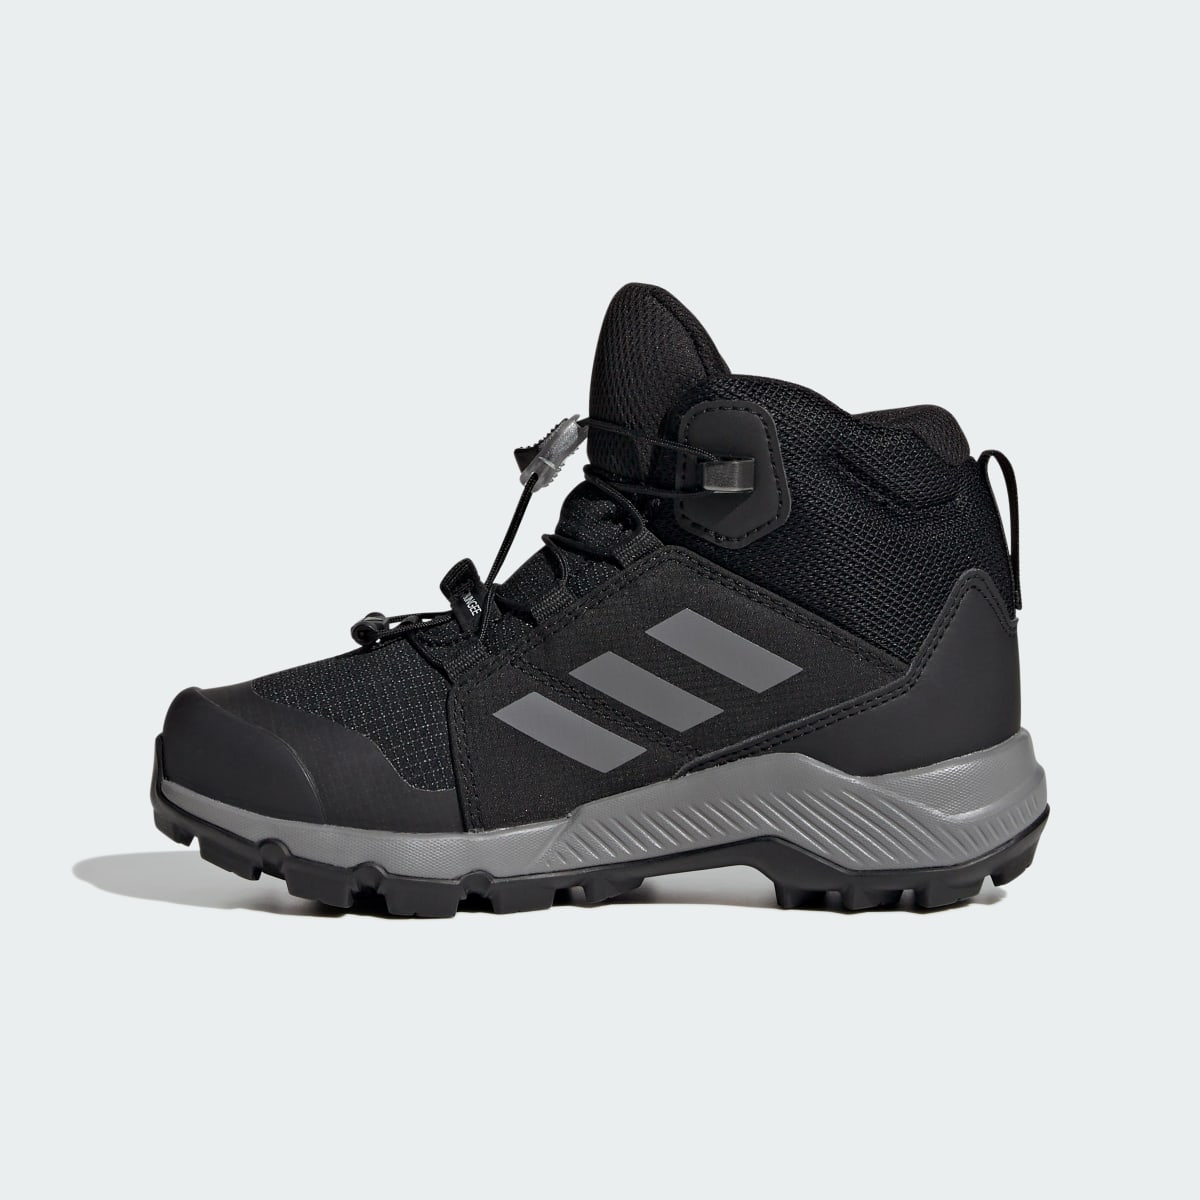 Adidas Chaussure de randonnée Organizer Mid GORE-TEX. 8